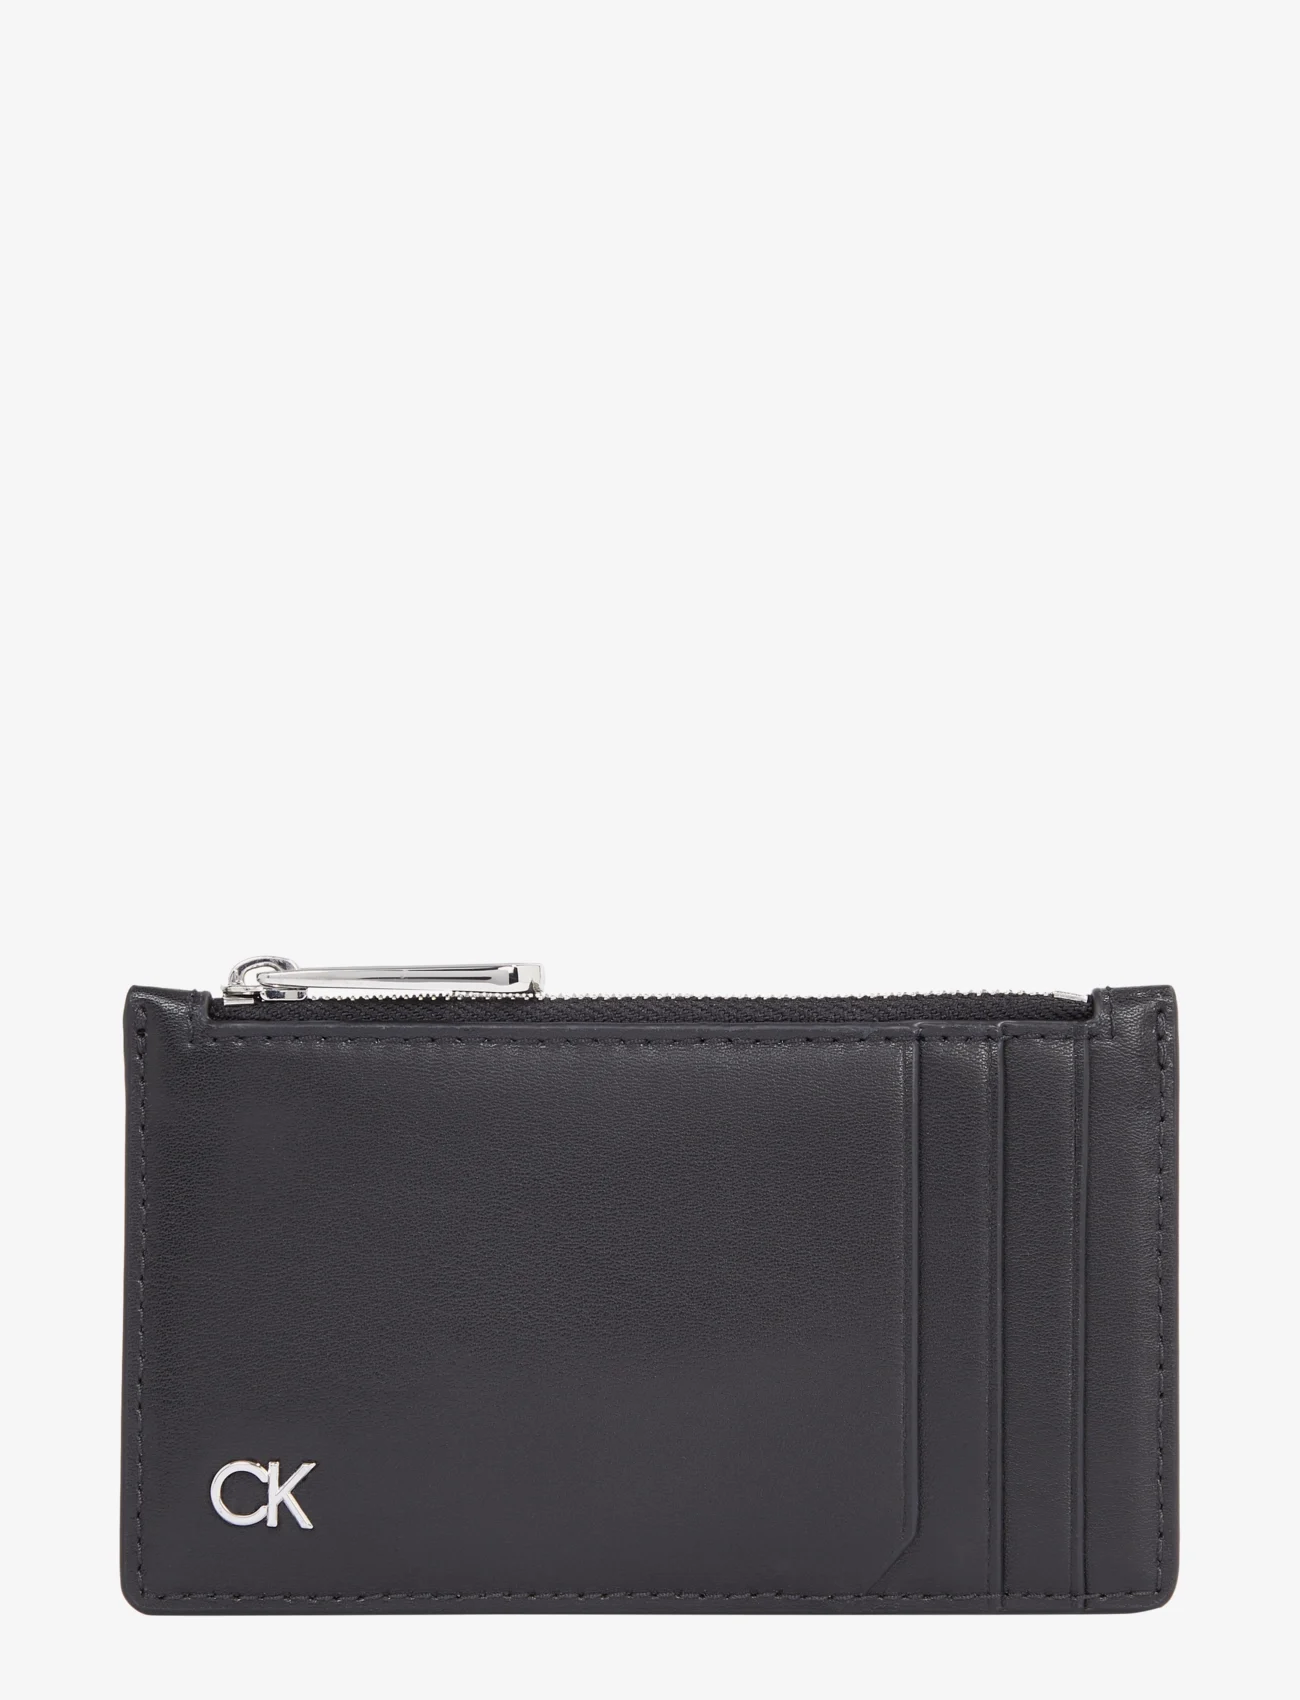 Calvin Klein - METAL CK NS CARDHOLDER 6CC - kartenhalter - ck black - 0